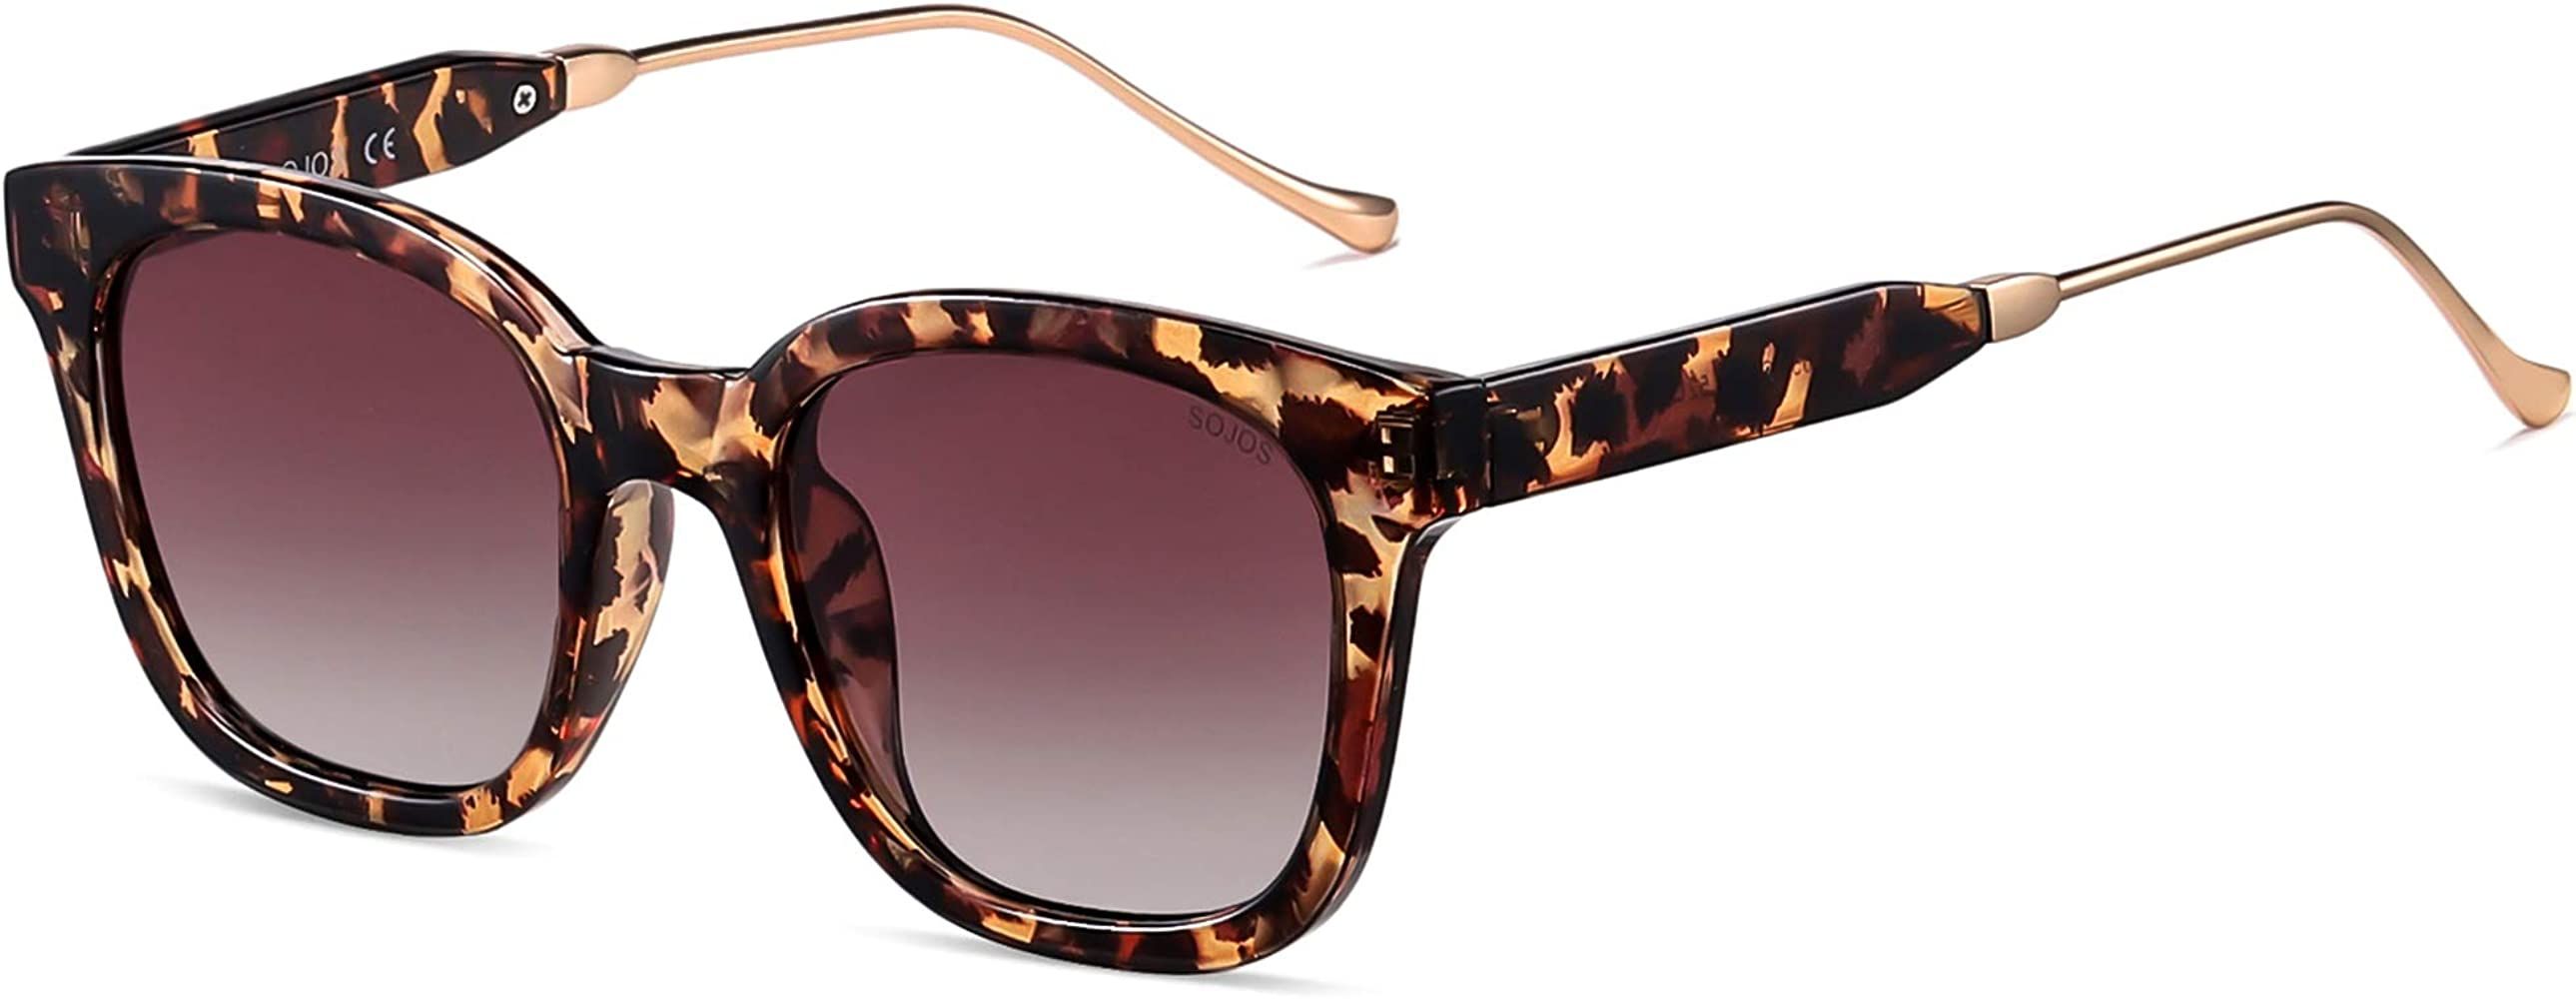 SOJOS Classic Square Polarized Sunglasses Womens Mens Retro Trendy Shades UV400 Sunnies | Amazon (US)